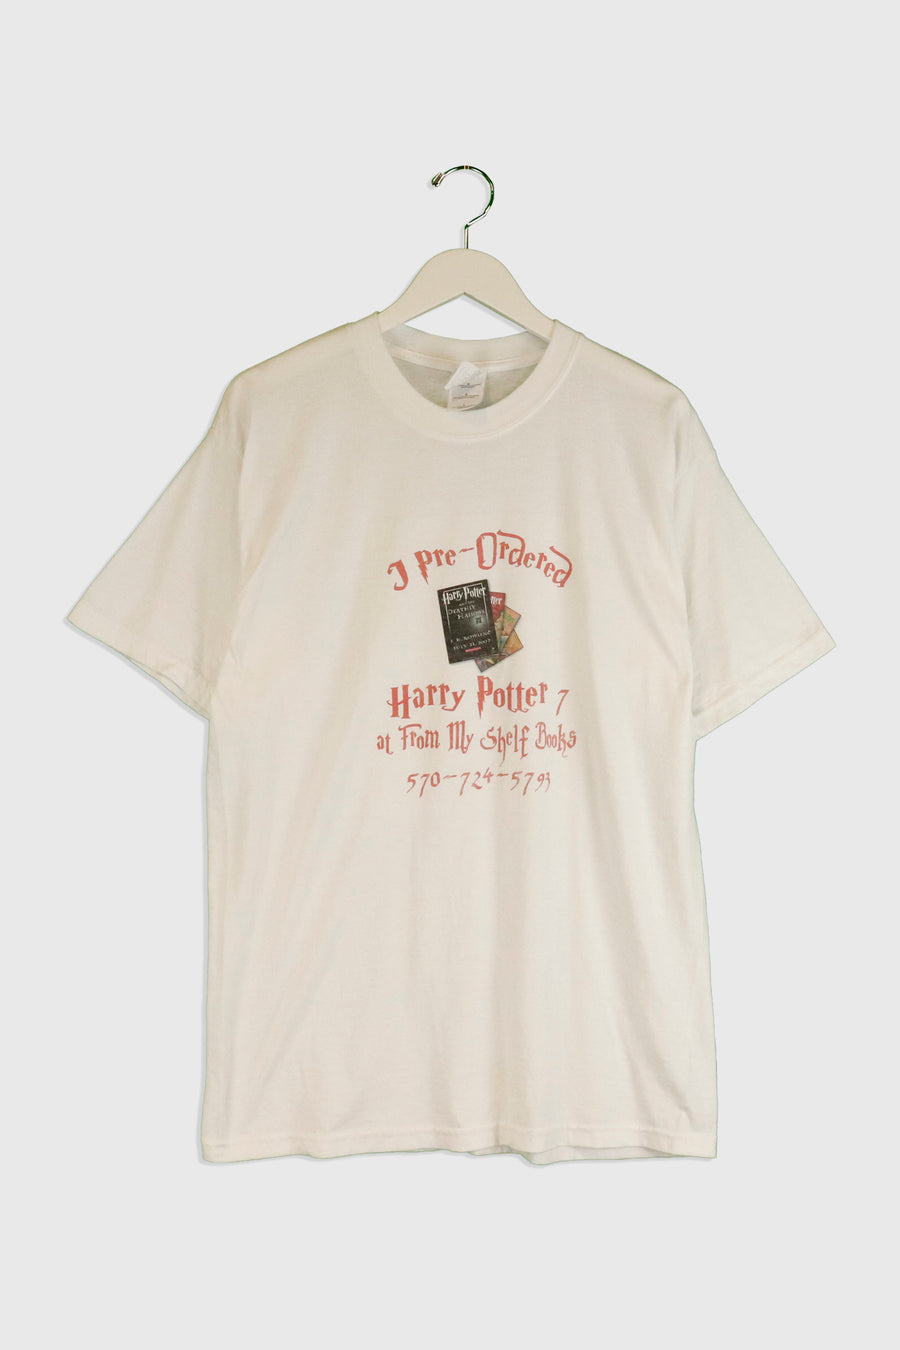 Vintage I Ordered Harry Potter 7 Graphic T Shirt Sz L